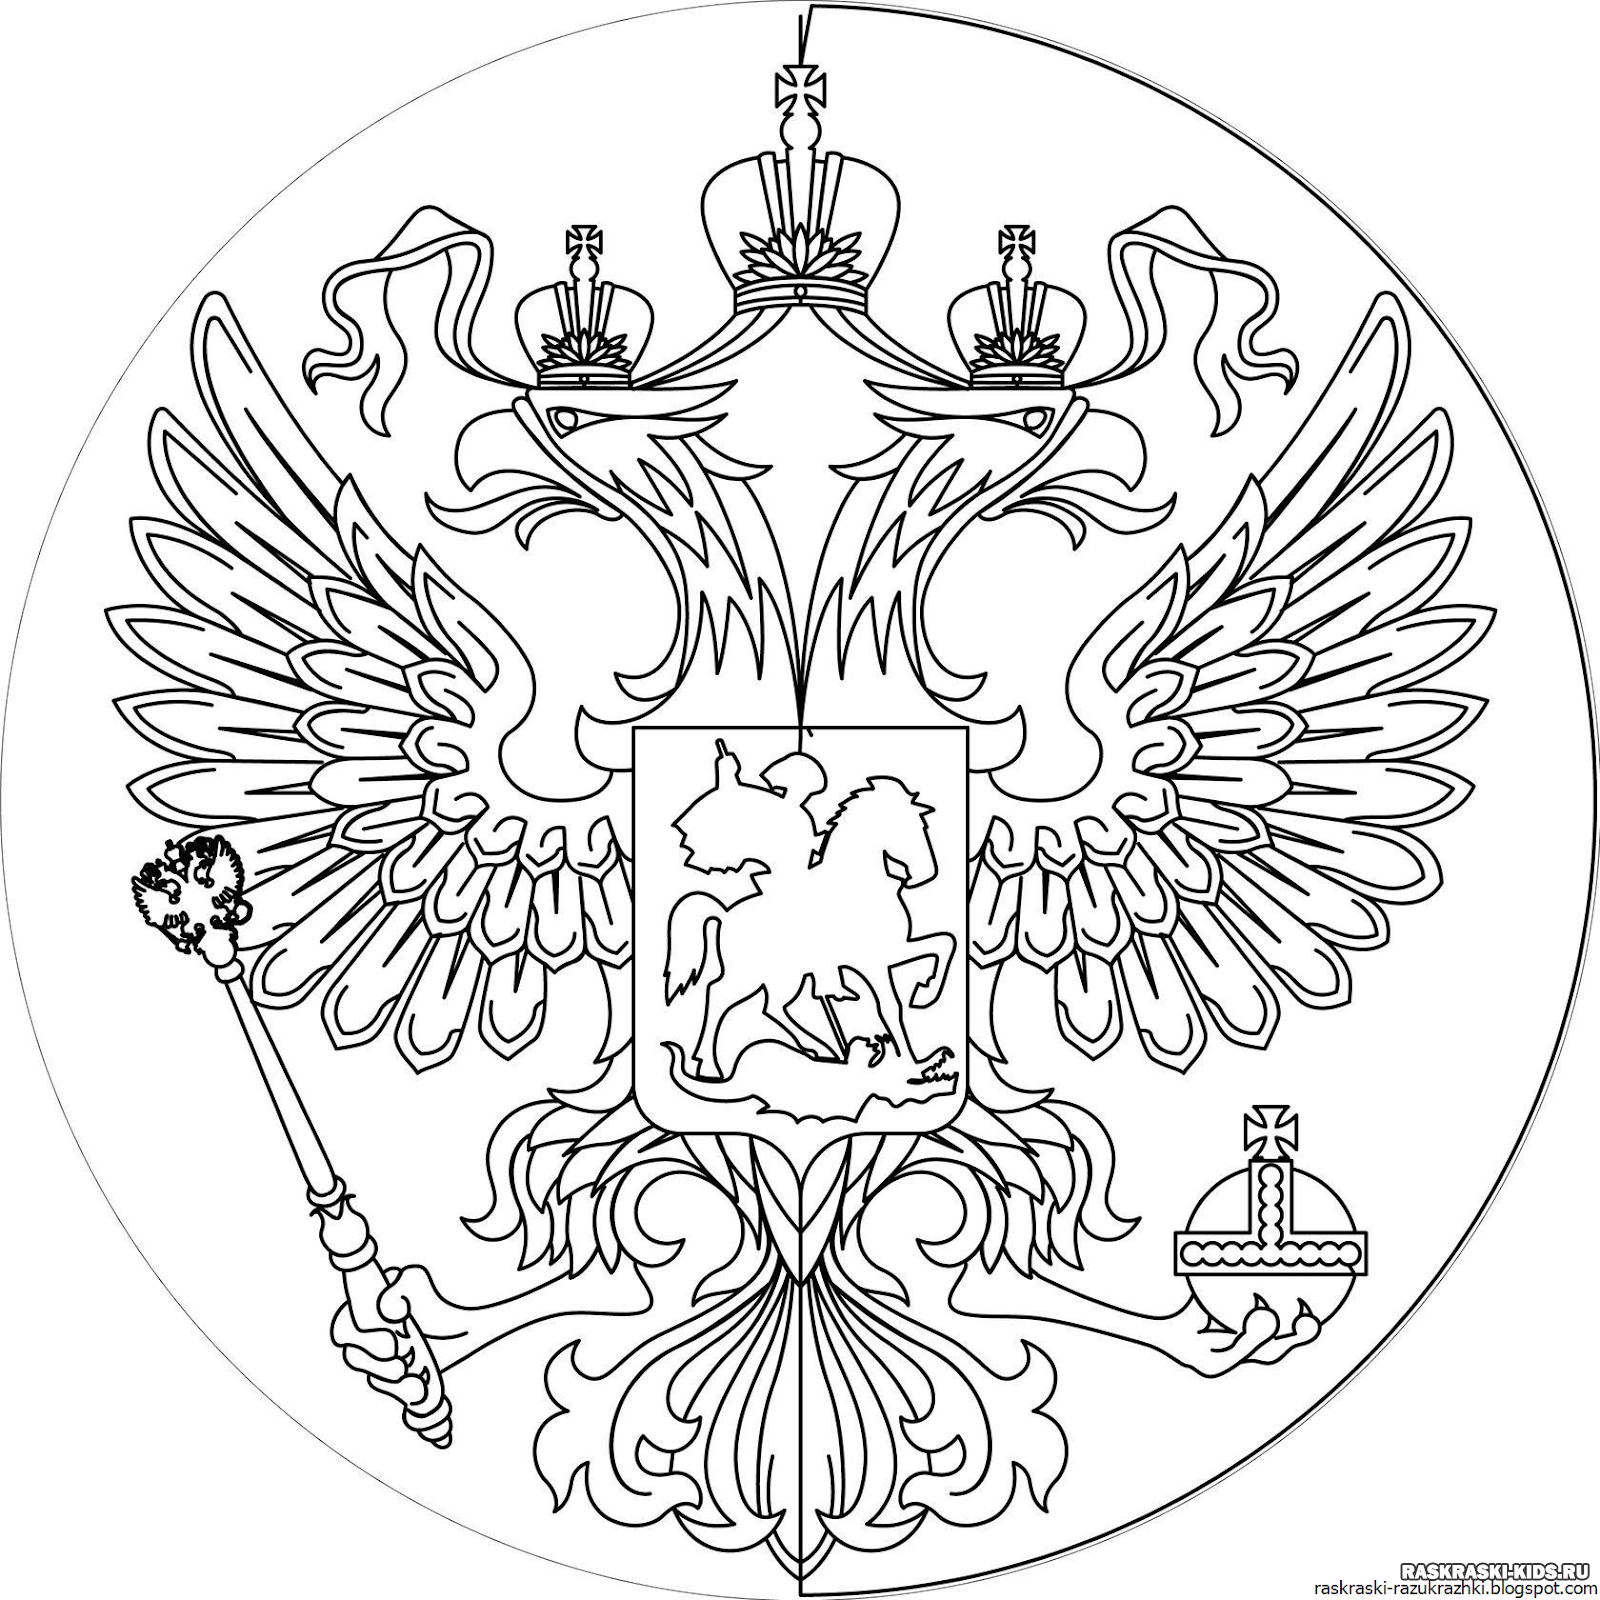 Герб Республики Беларусь — раскраска